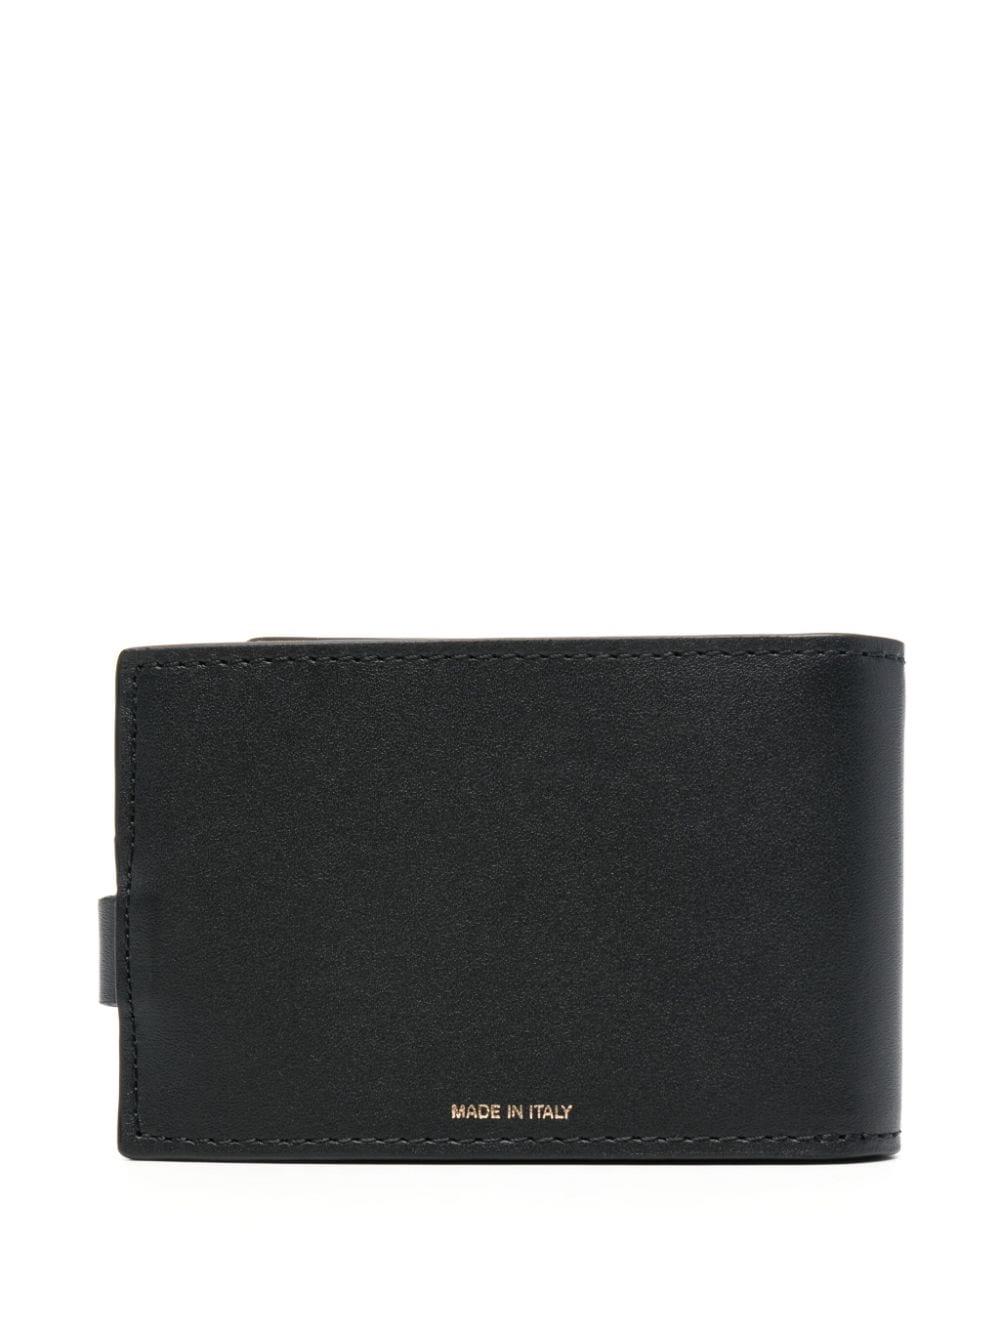 Paul Smith leather card holder - Black